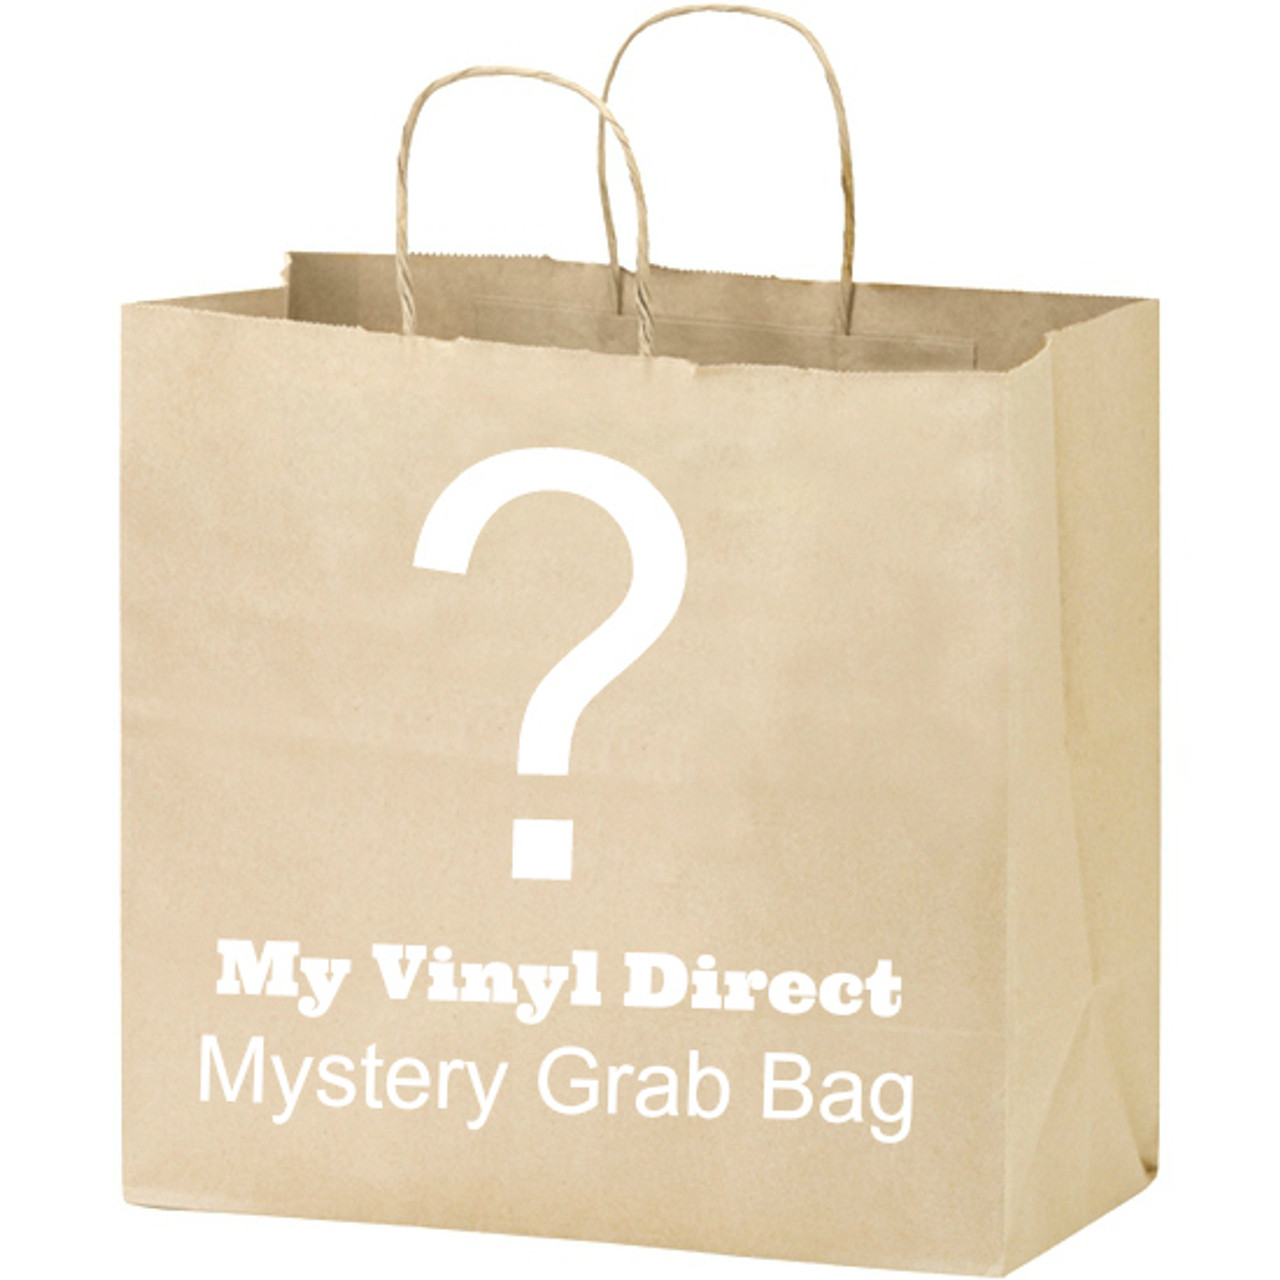 Mystery Grab Bag - My Vinyl Direct